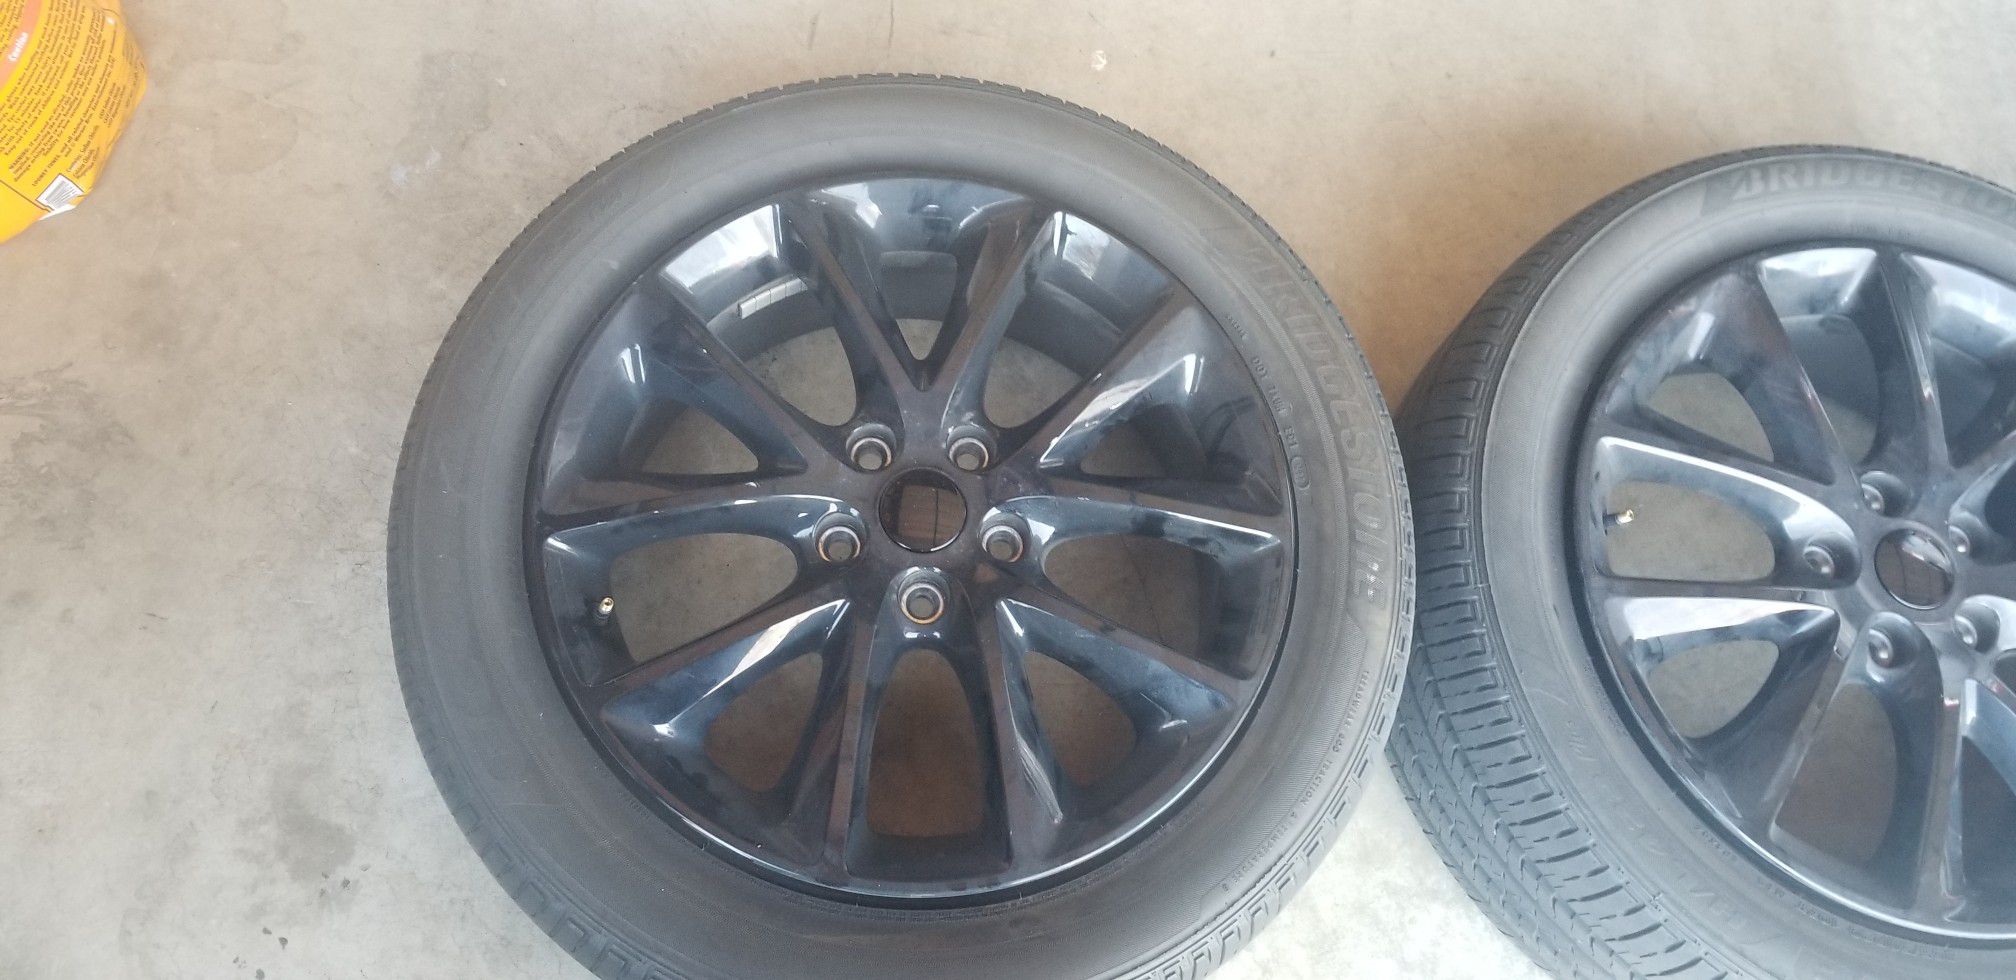 2017 Dodge Durango RT wheels w/tires